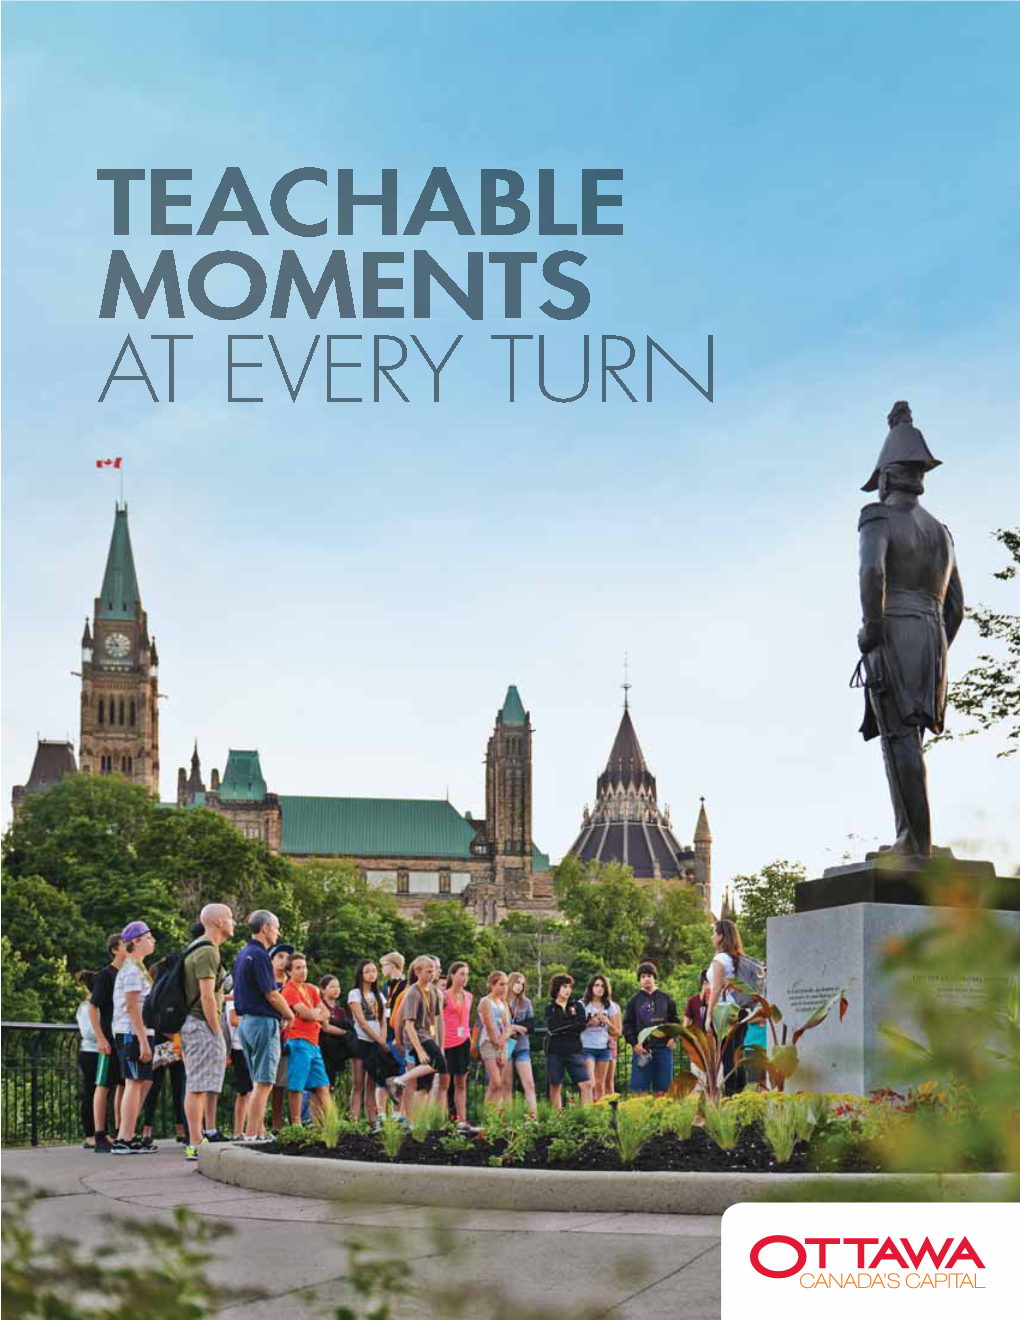 Brochure of City of Ottawa